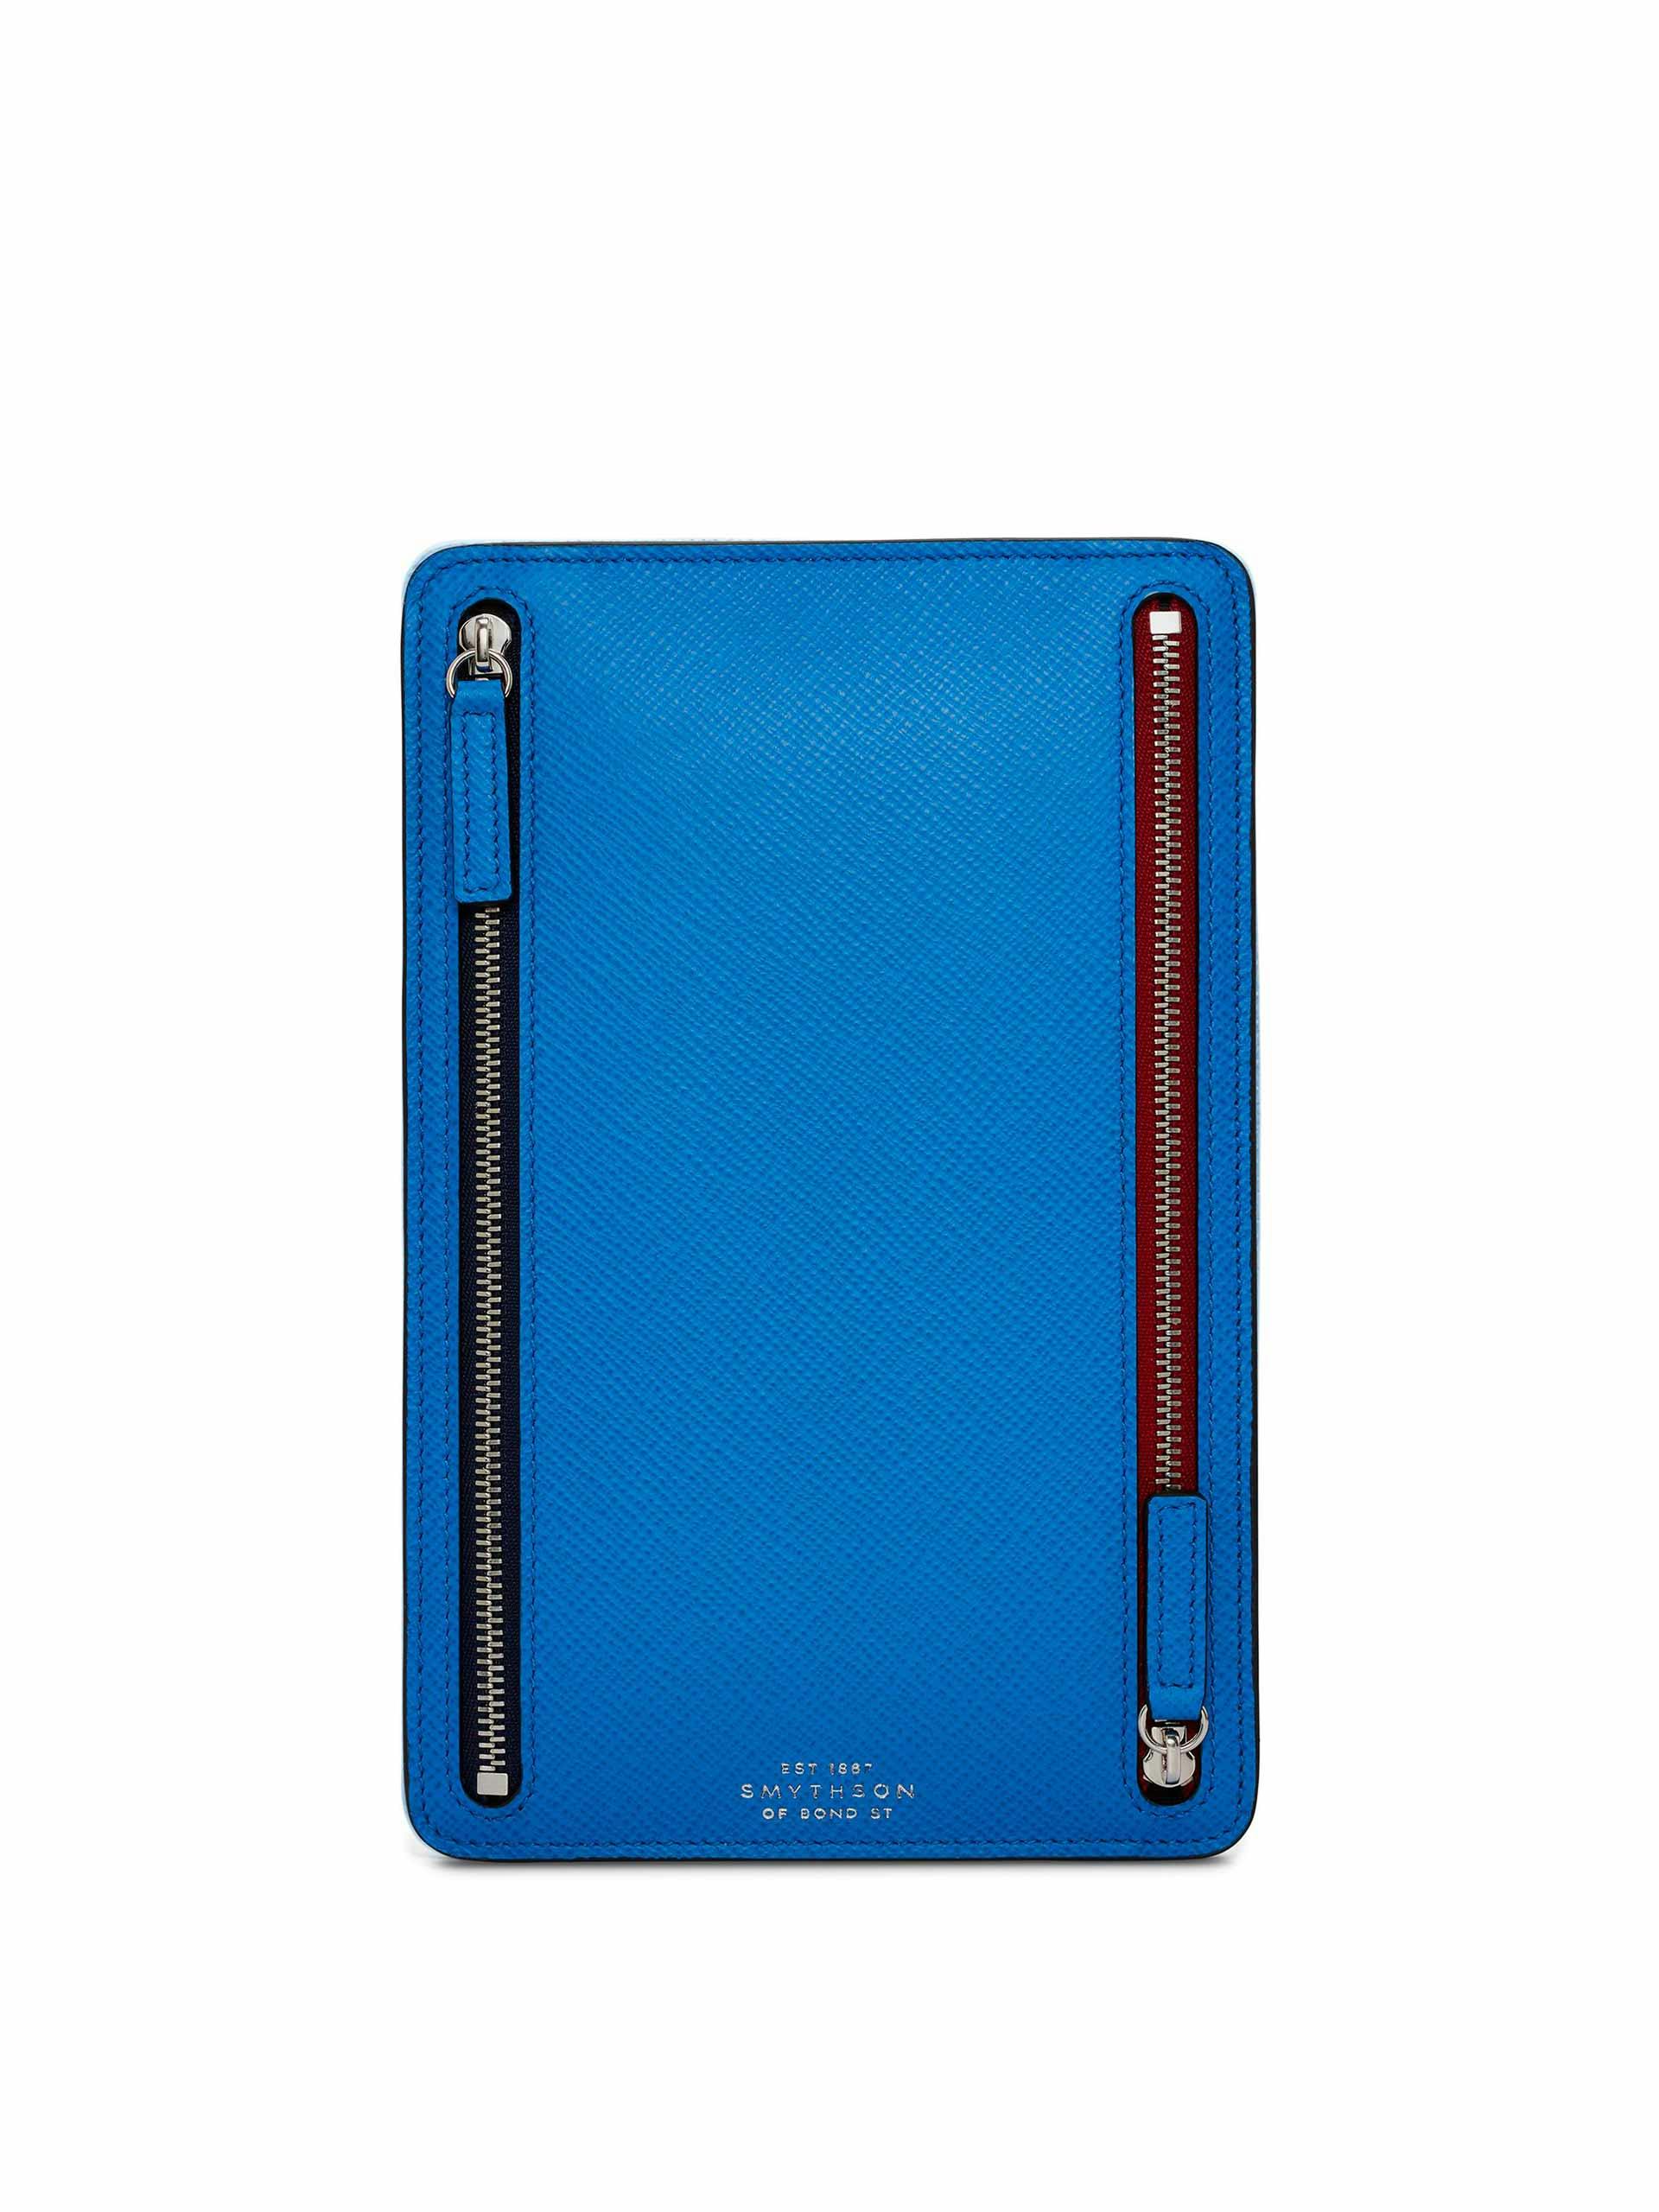 Blue leather zip wallet